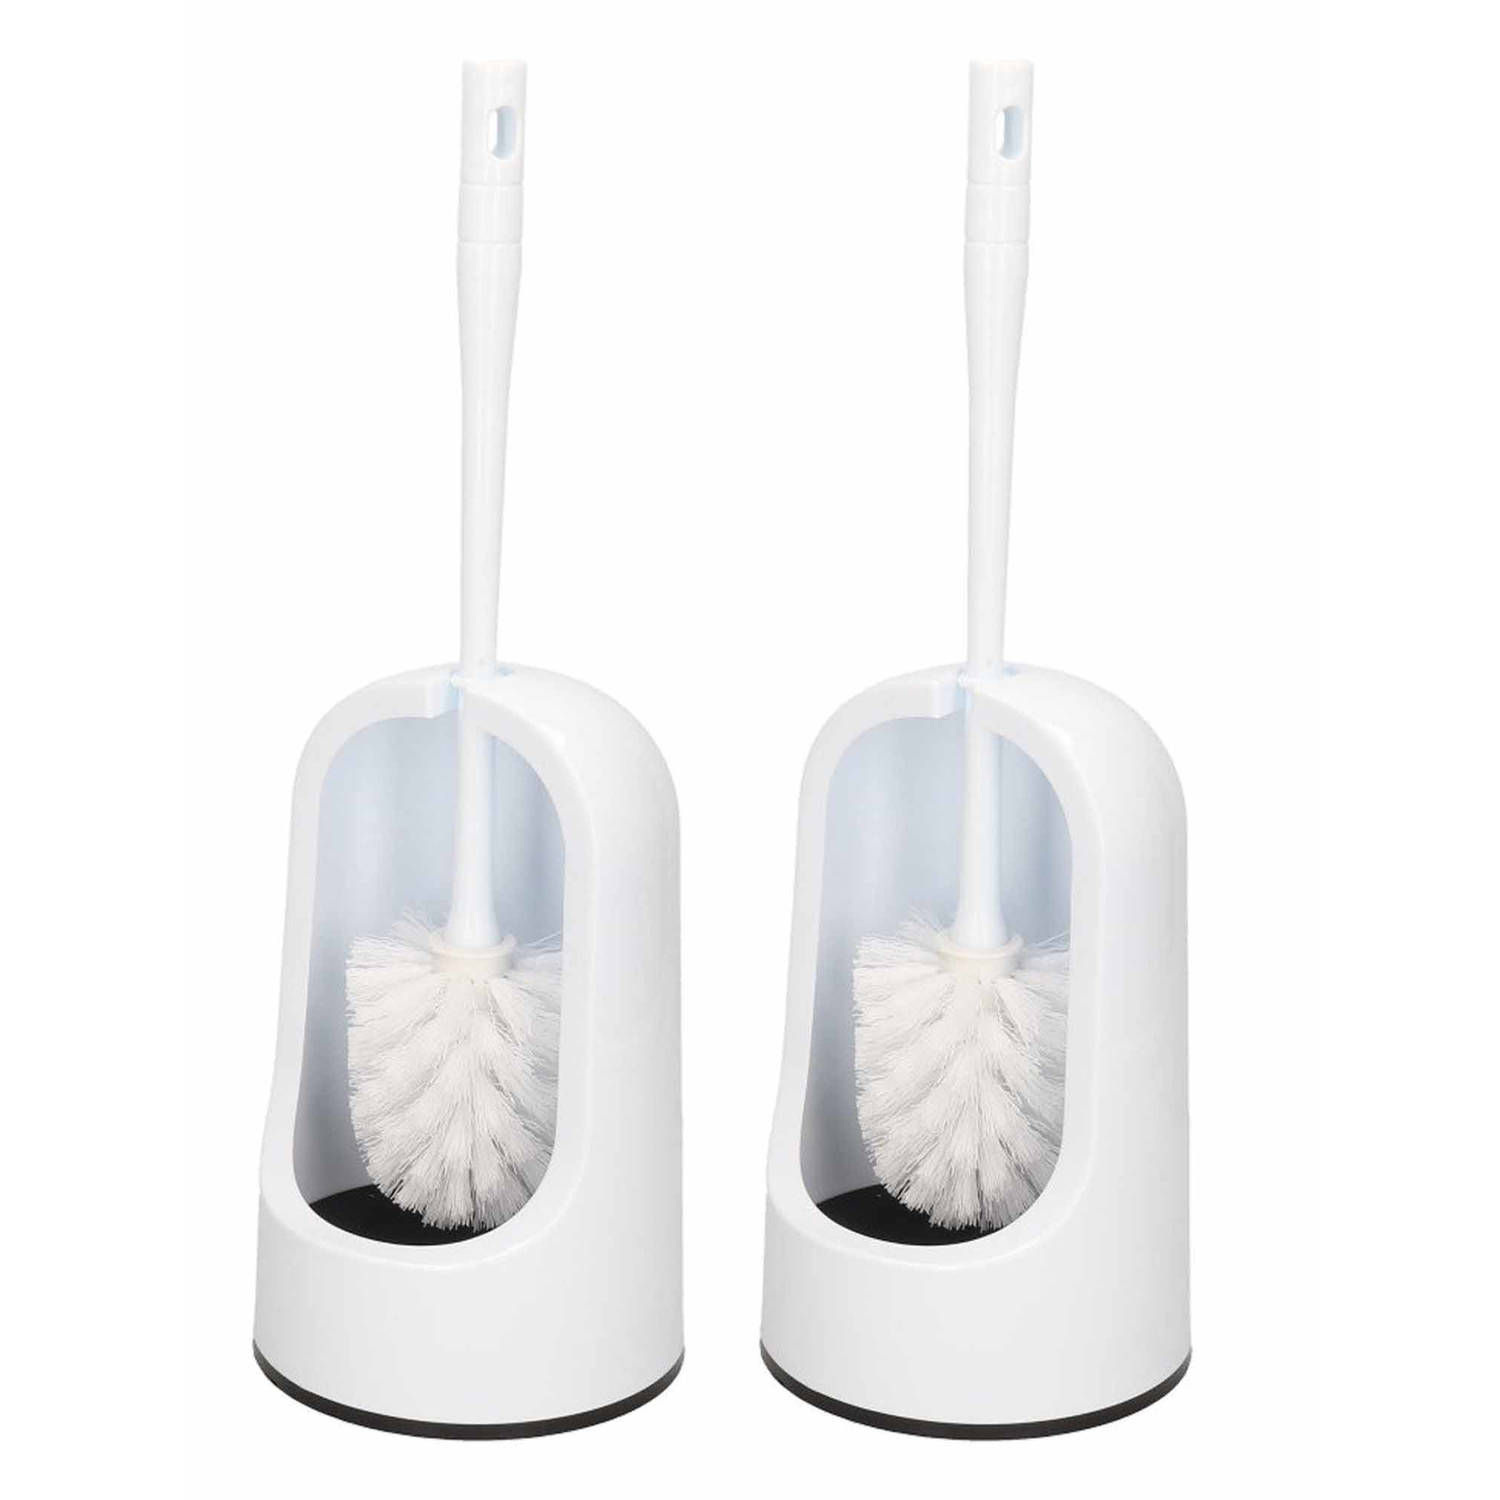 2x Toiletborstels/wc-borstels met houder wit kunststof 40 cm - Toiletborstels